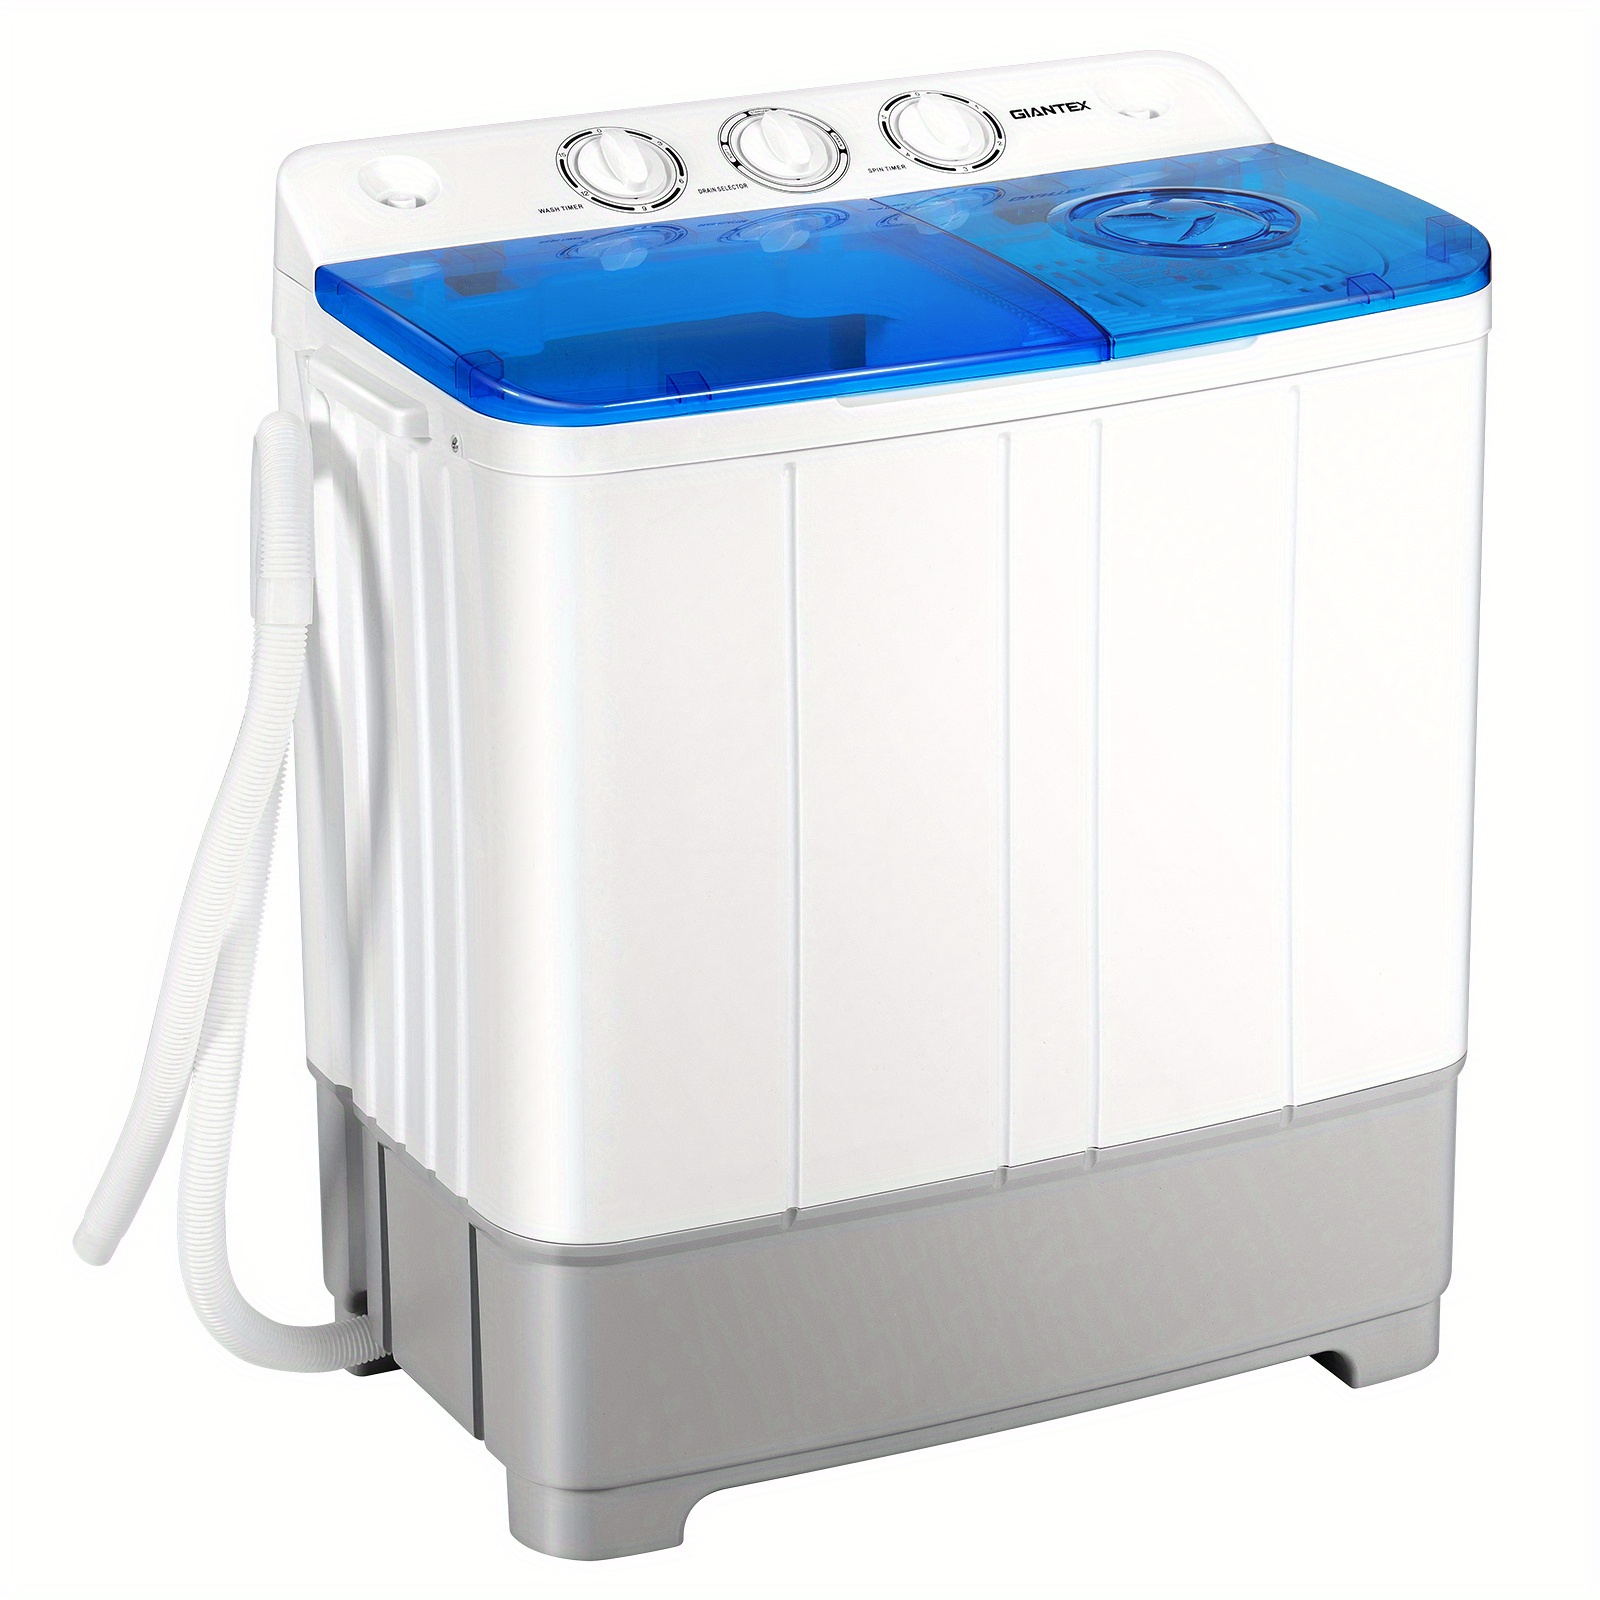 

Lifezeal Portable Twin Tub Mini Washing Machine Washer 13.2lb&spinner 8.8lb Blue